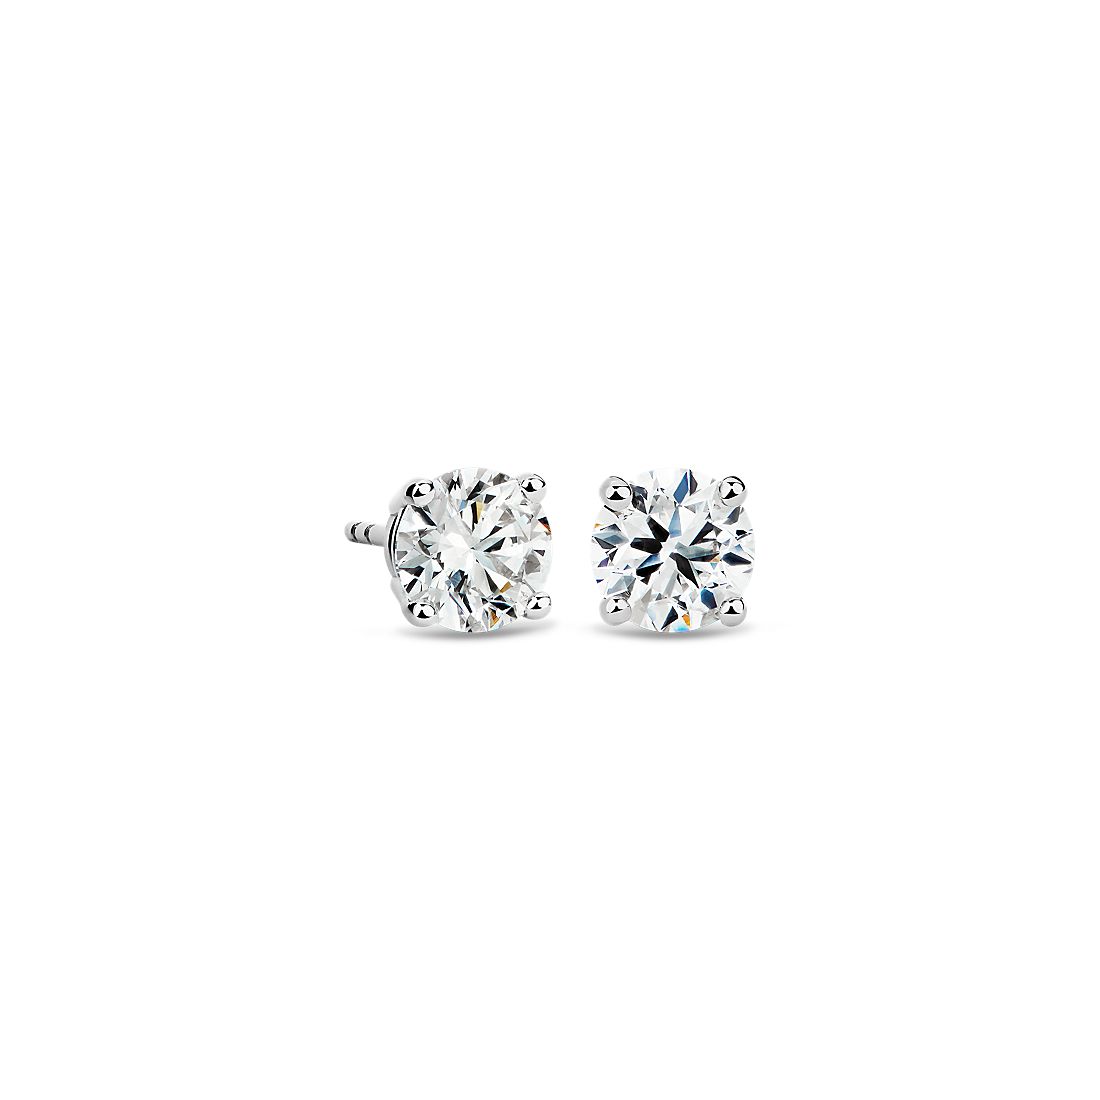 Astor Diamond Stud Earrings in Platinum (2 ct. tw.) - H / SI2